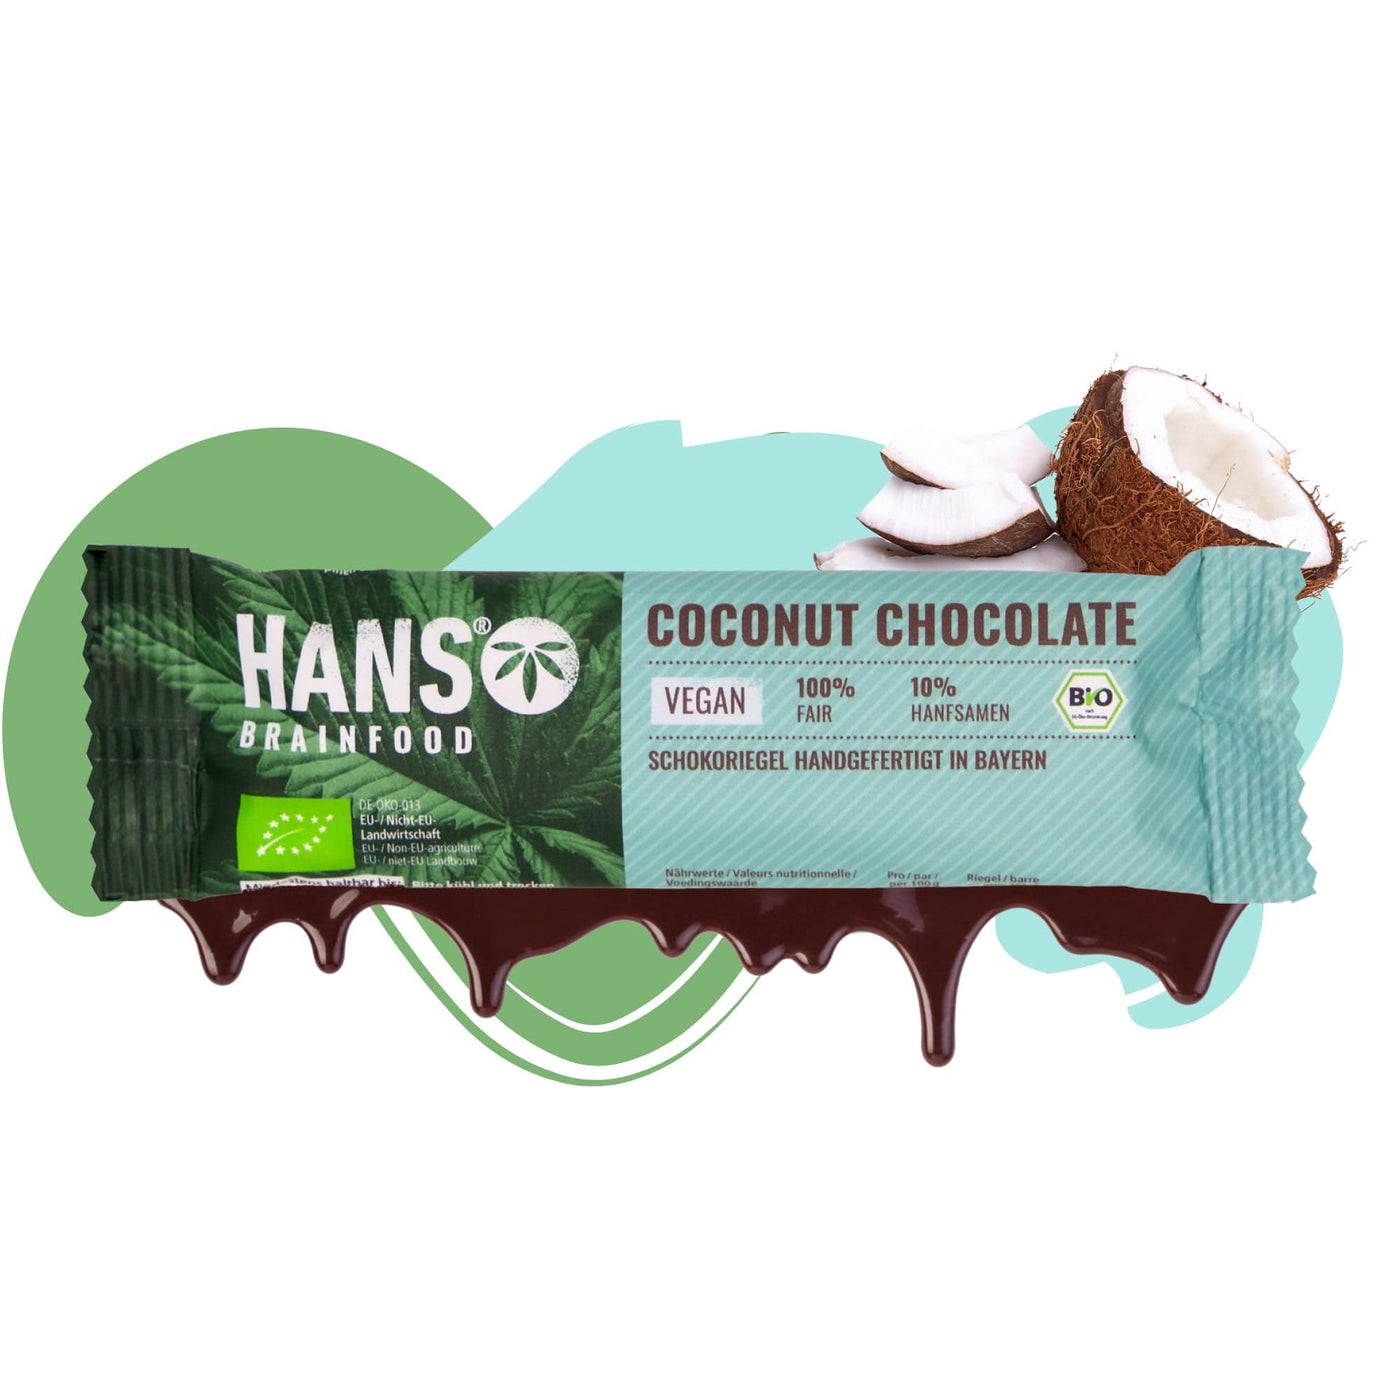 Hans Brainfood Coconut Chocolate